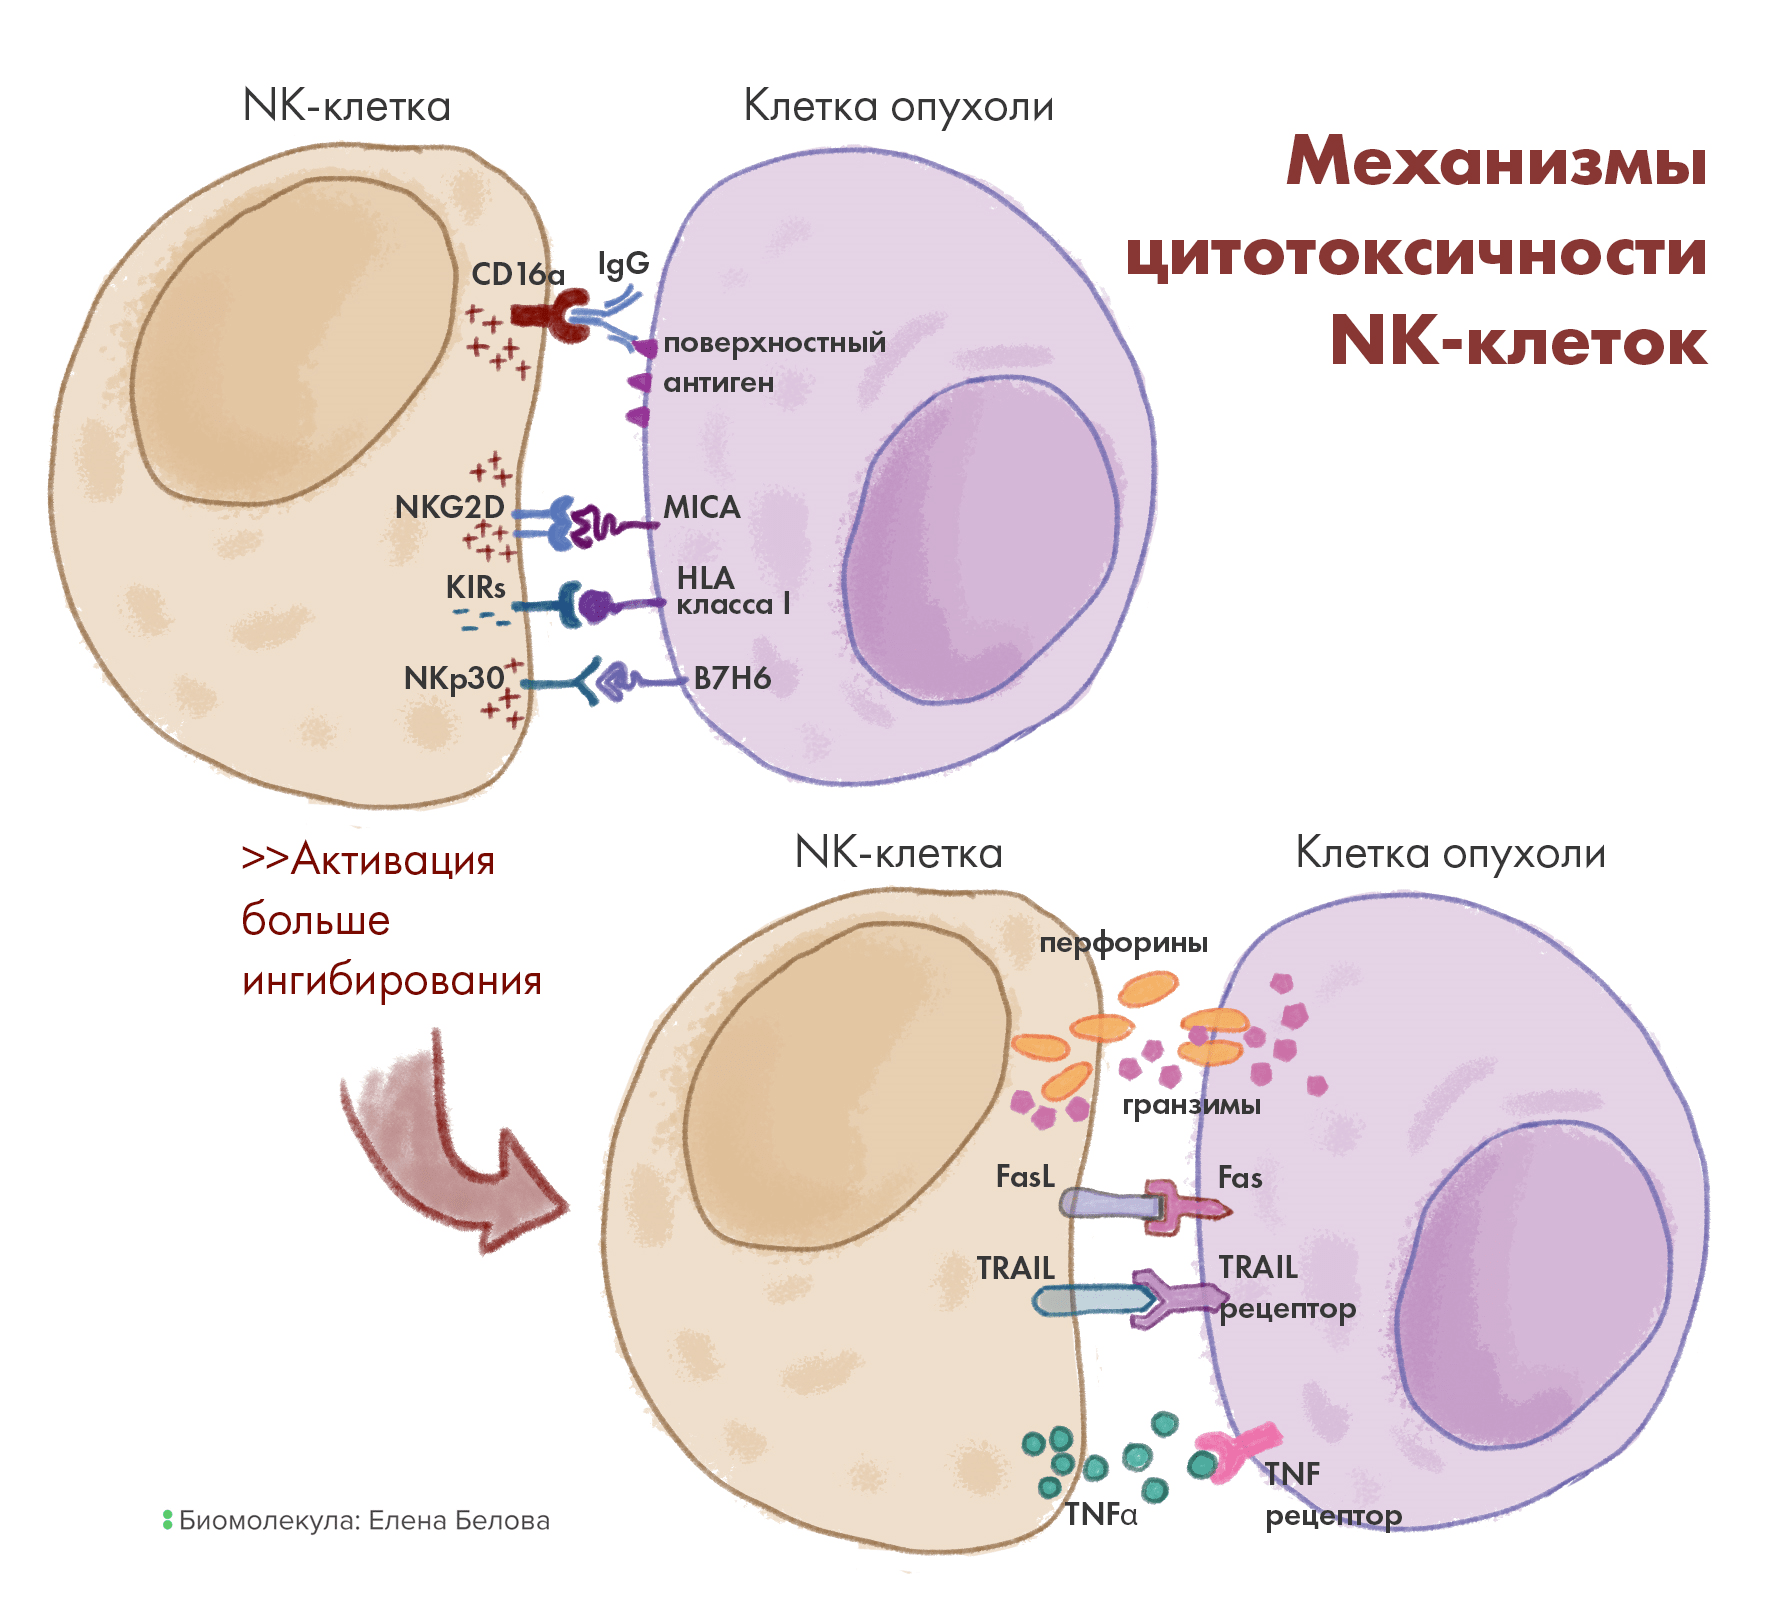 Механизмы цитотоксичности NK-клеток